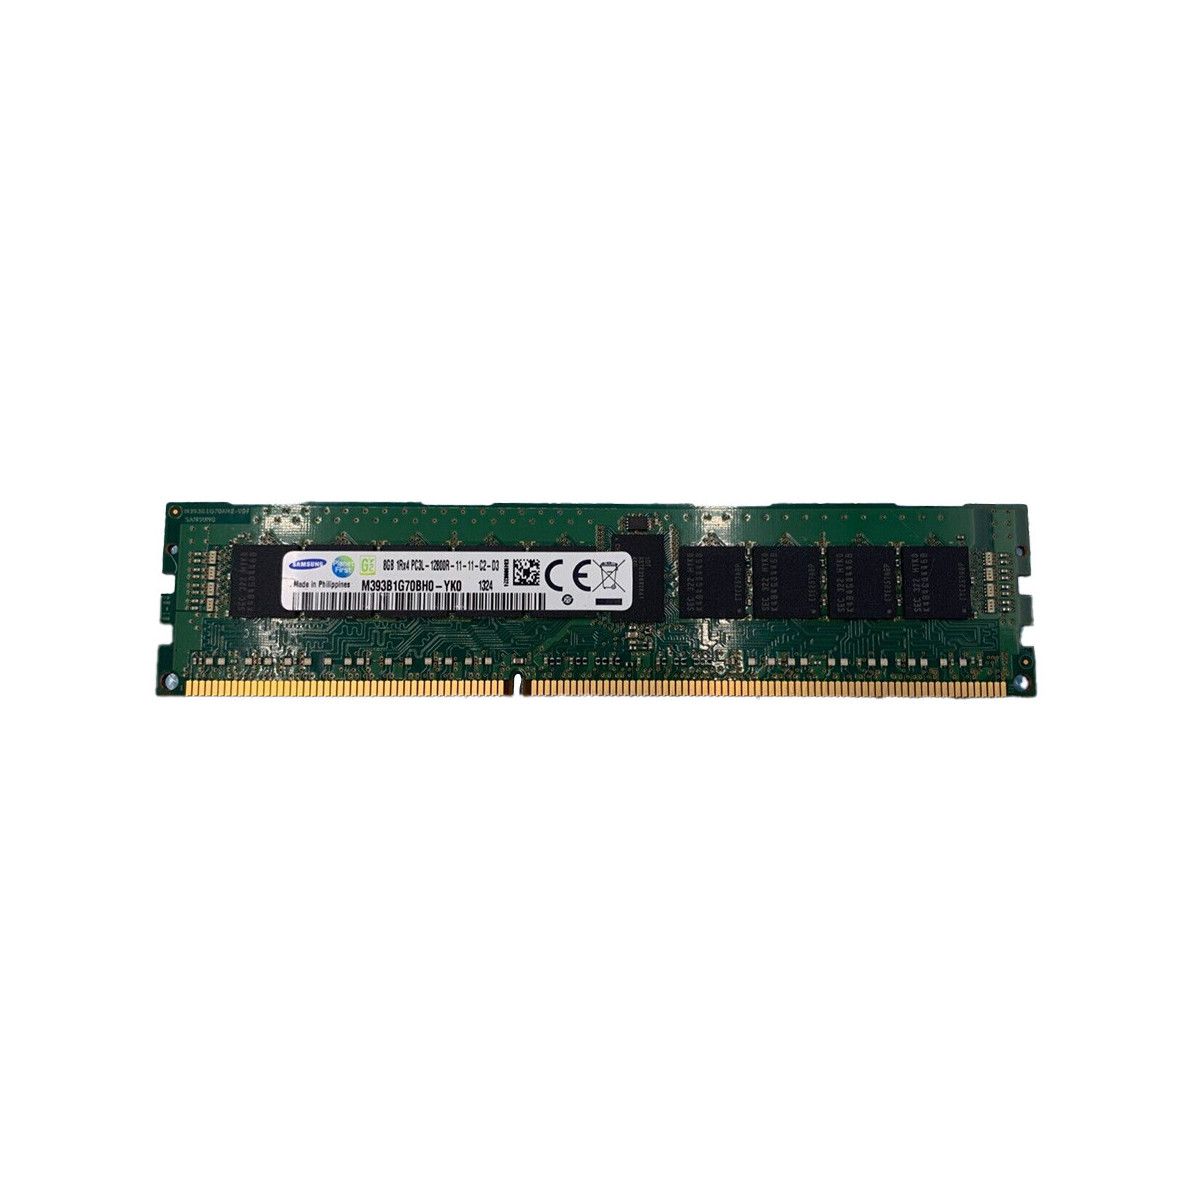 00D5036 - IBM 1x 8GB DDR3-1600 RDIMM PC3L-12800R